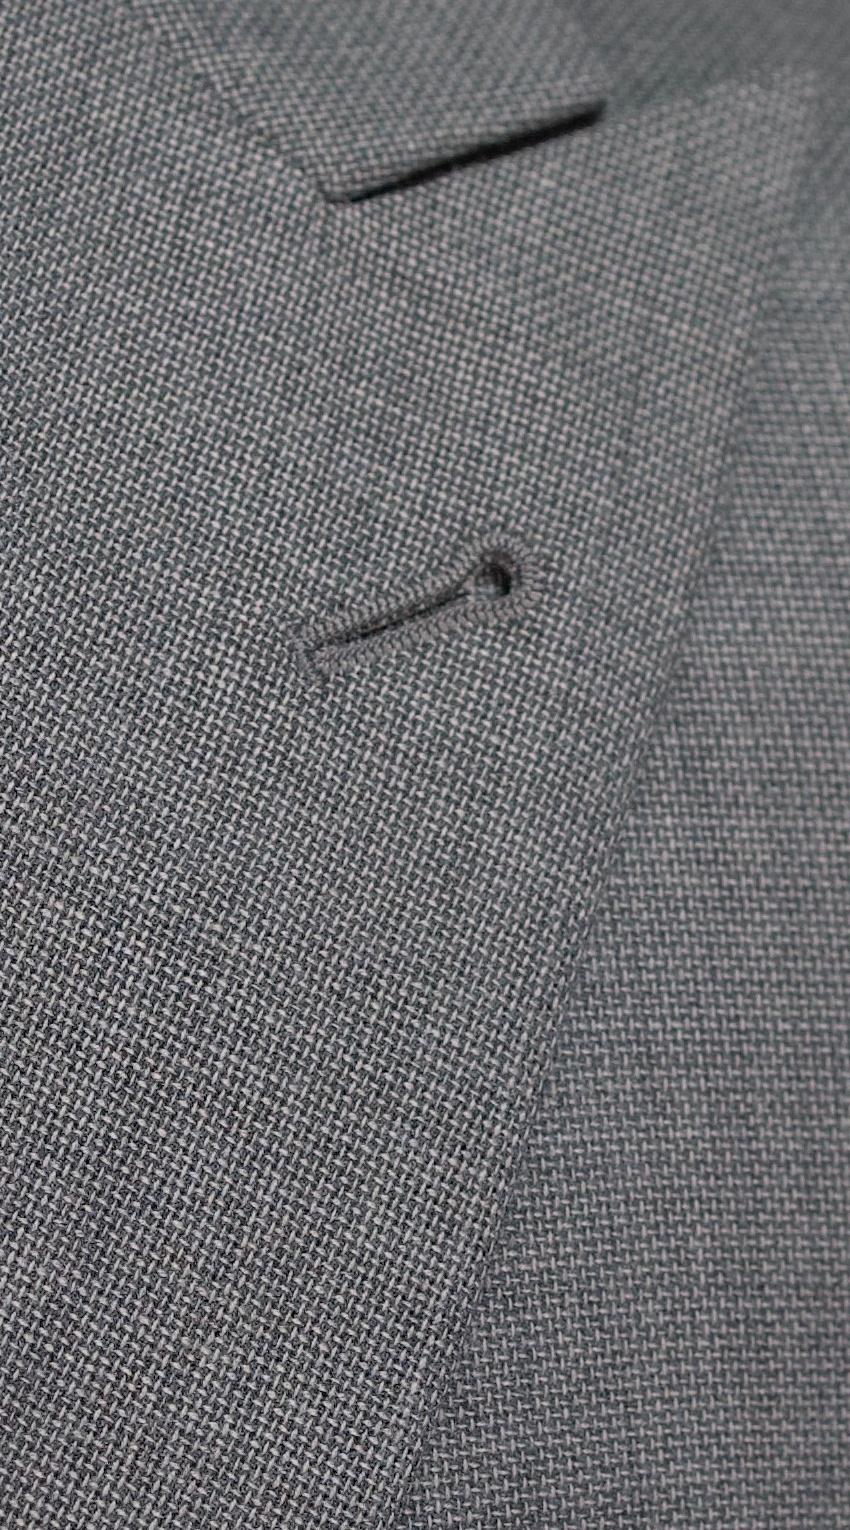 Metallic Gray Plain Weave Suit